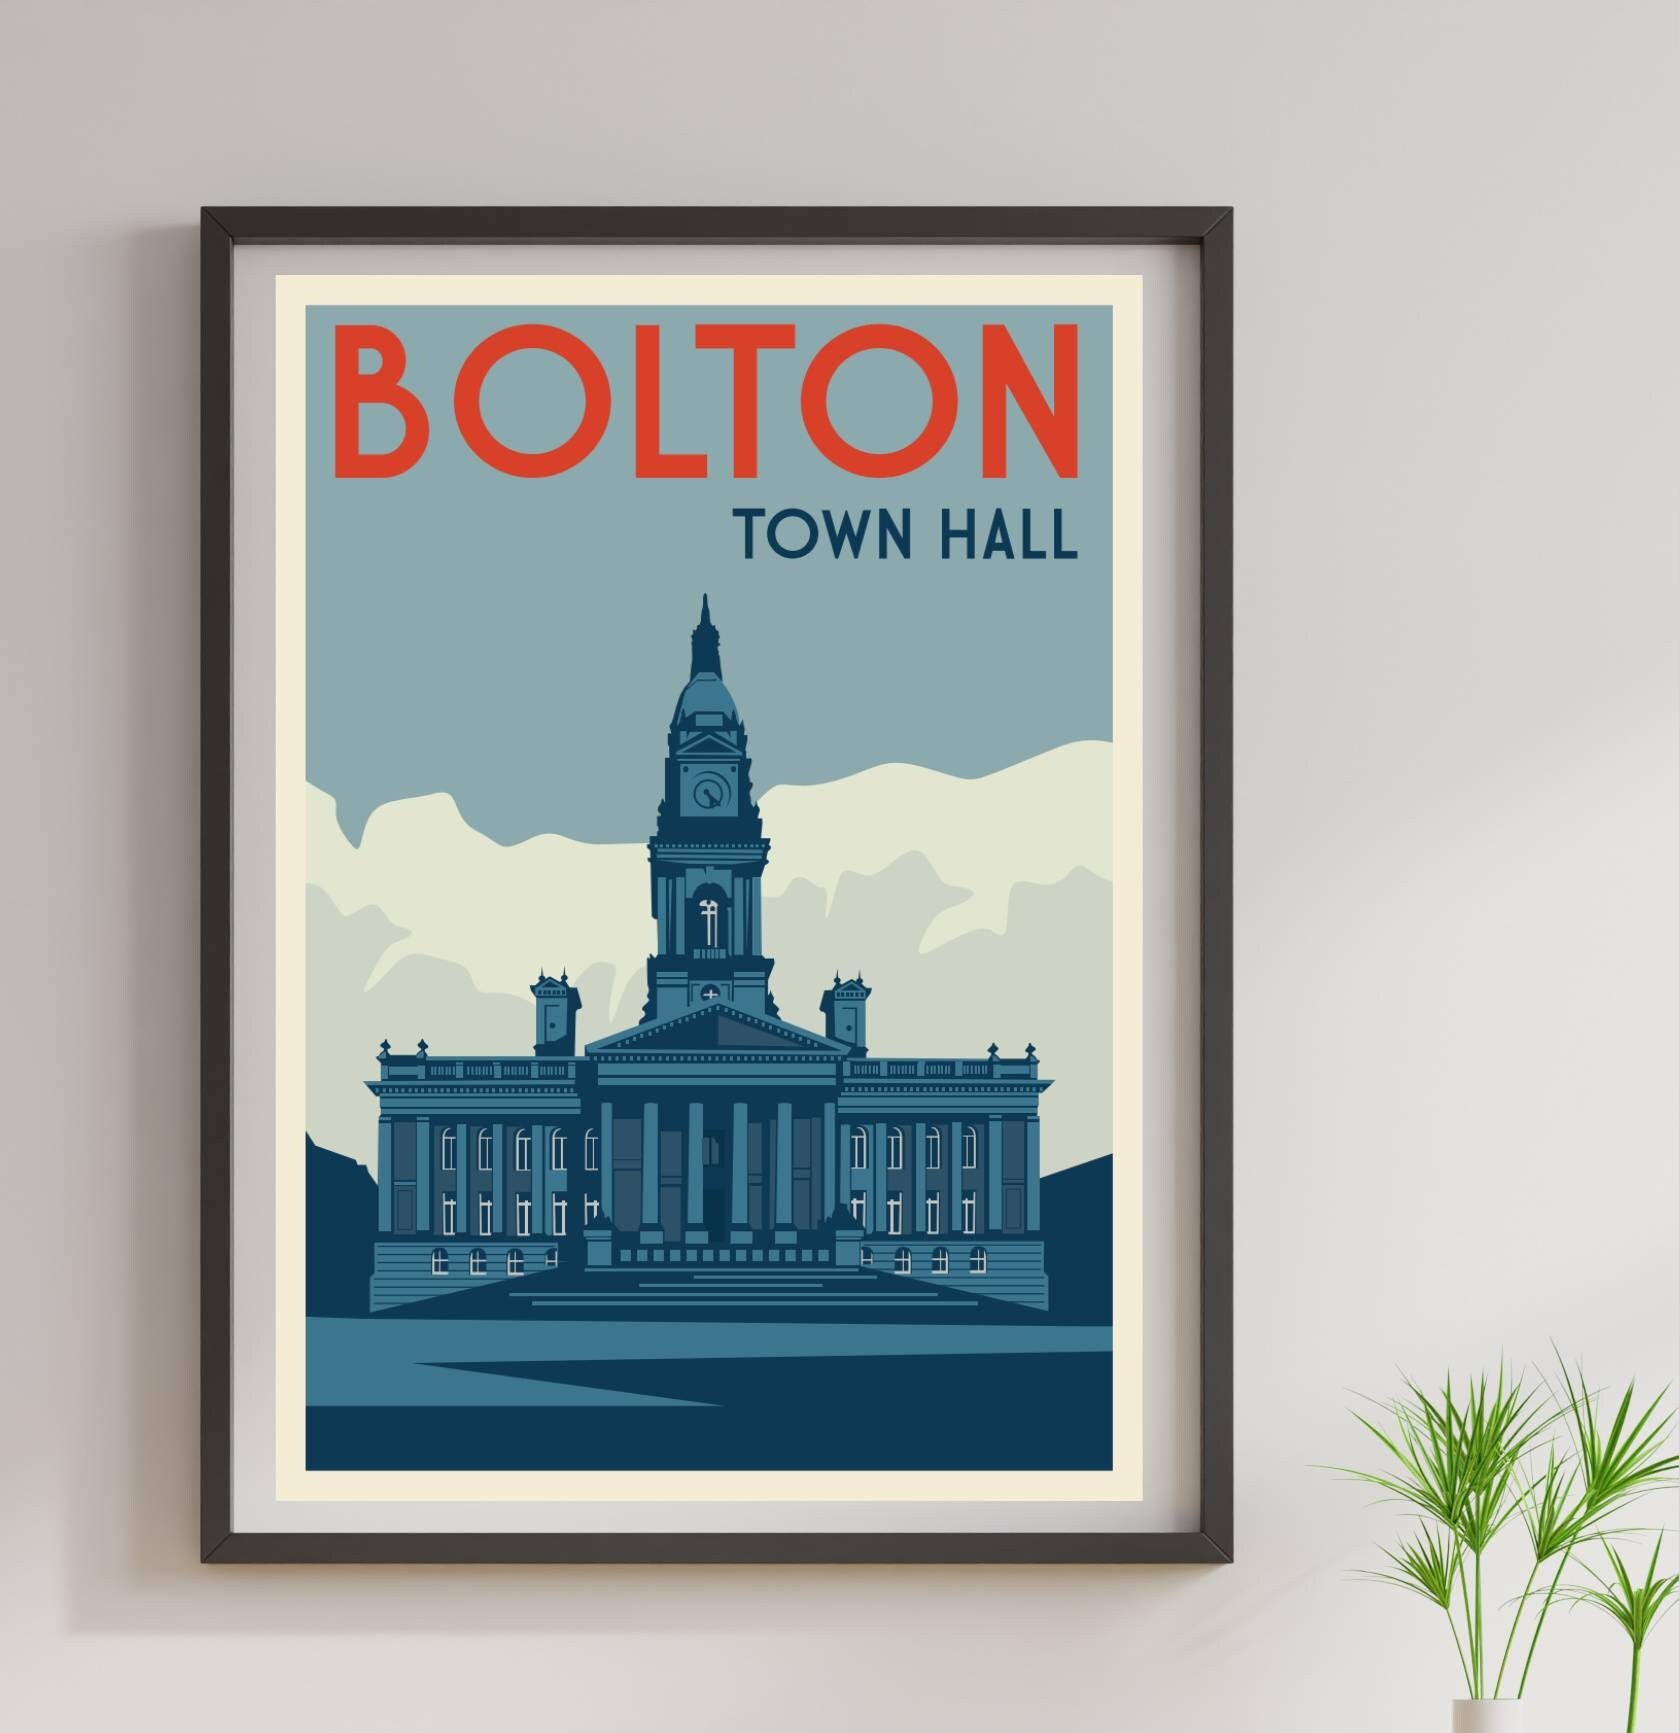 Minimalist design of Bolton's iconic Town Hall